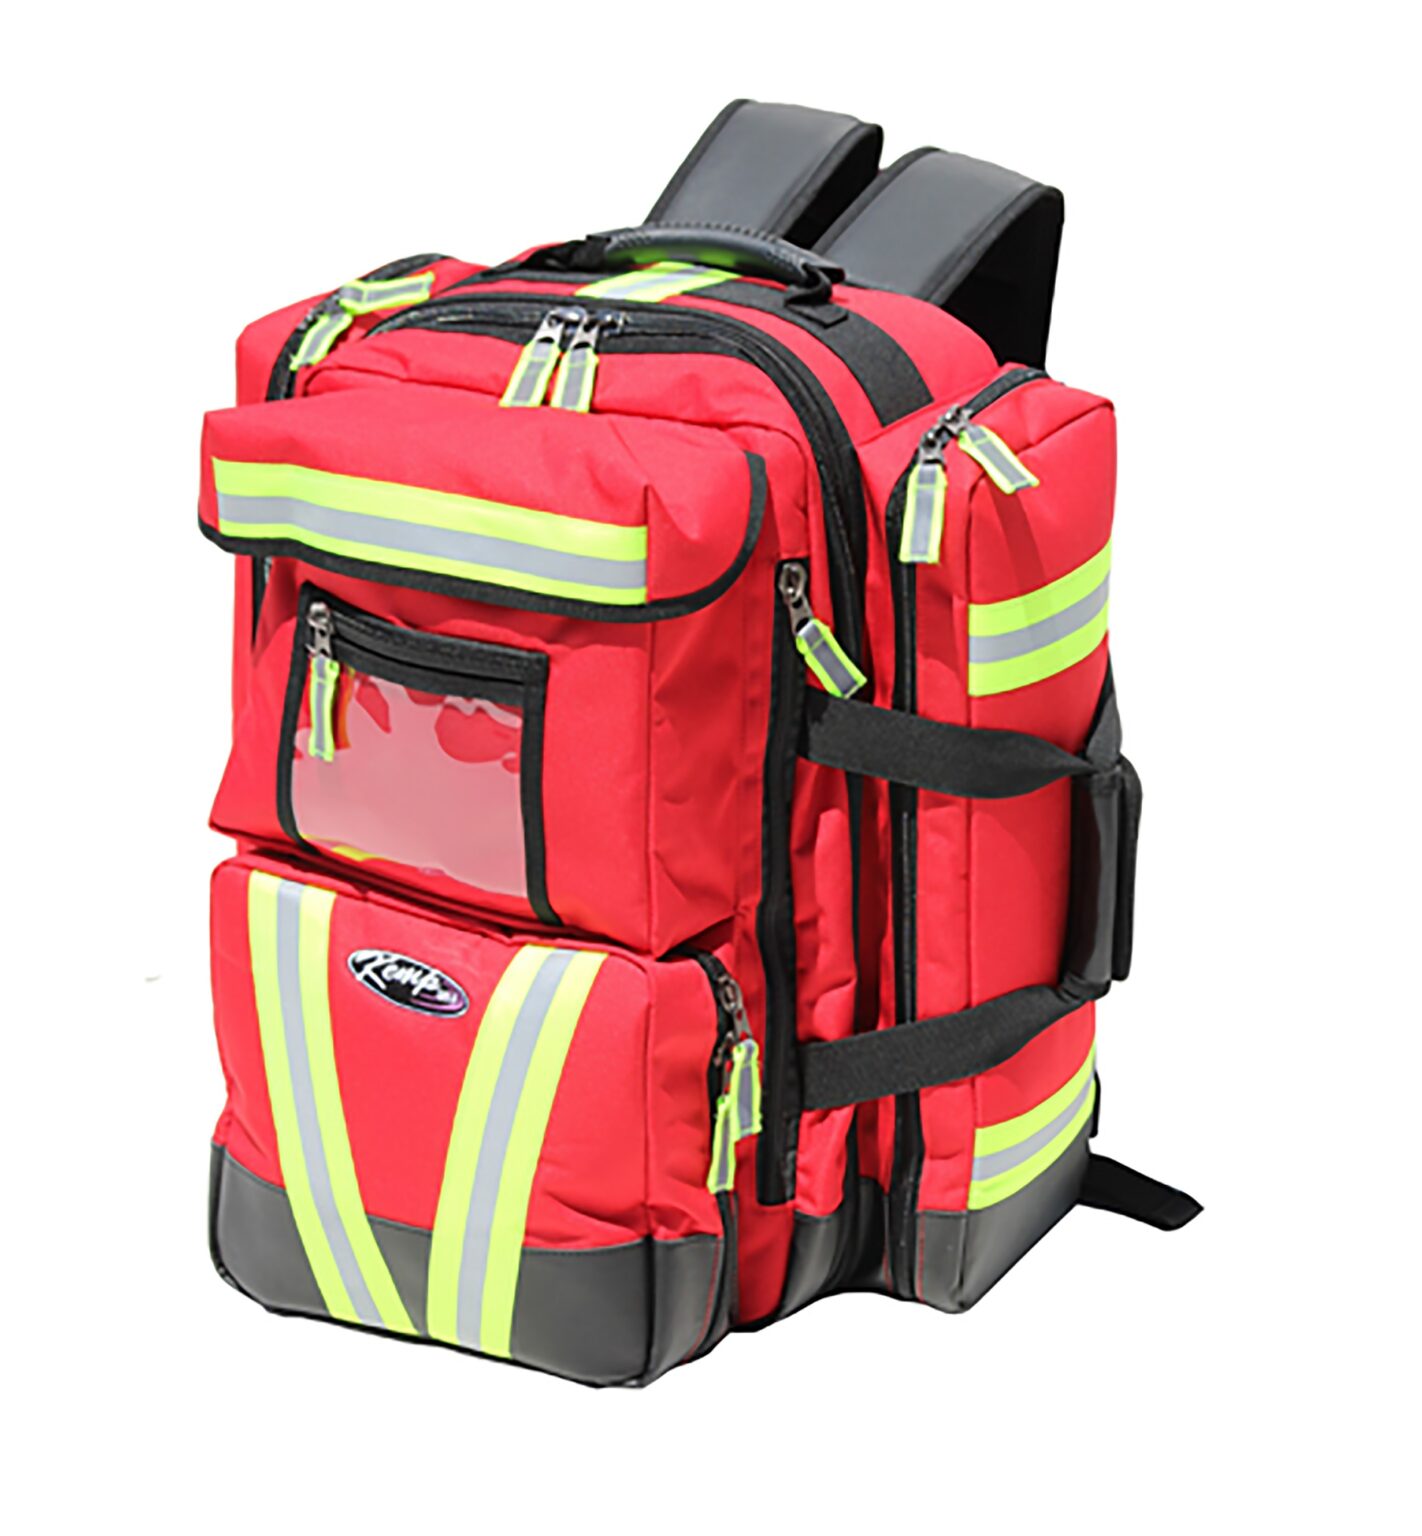 safety travel backpack